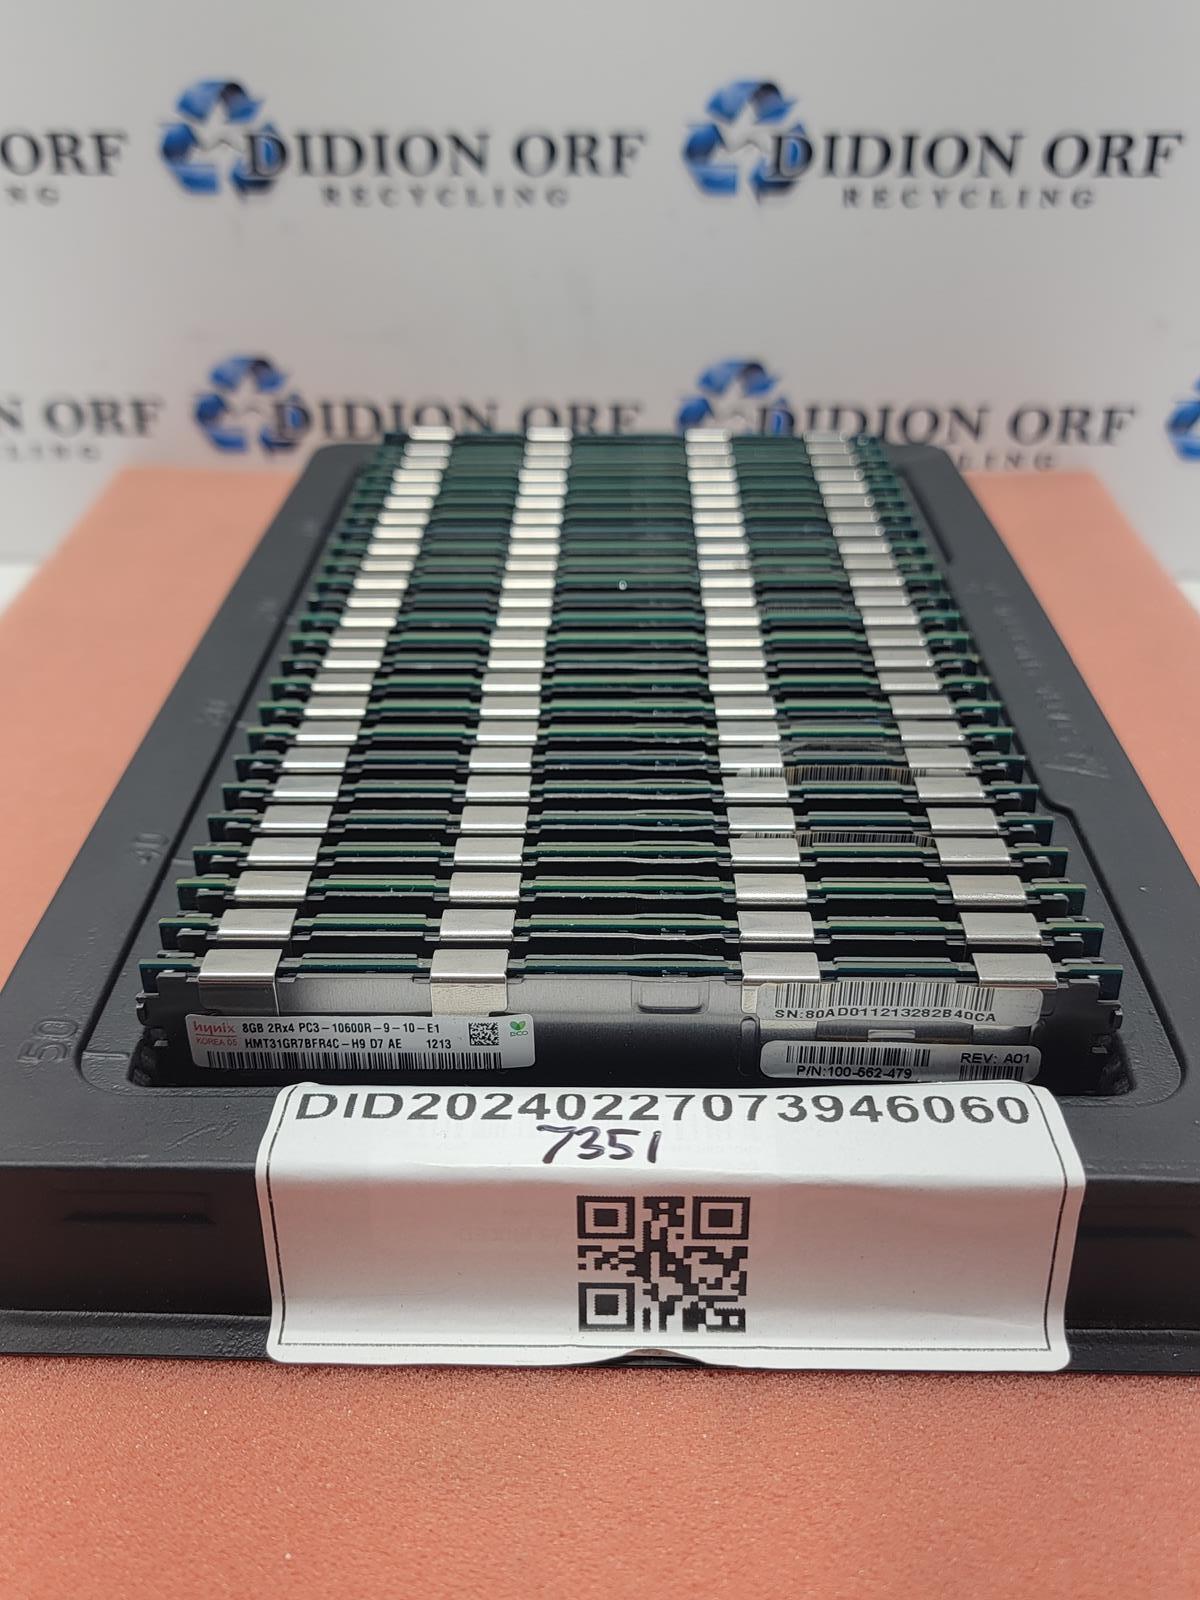 Lot of 25 8gb DDR3 Server Ram Memory Mixed Brand/Model/Speed SKU 7351